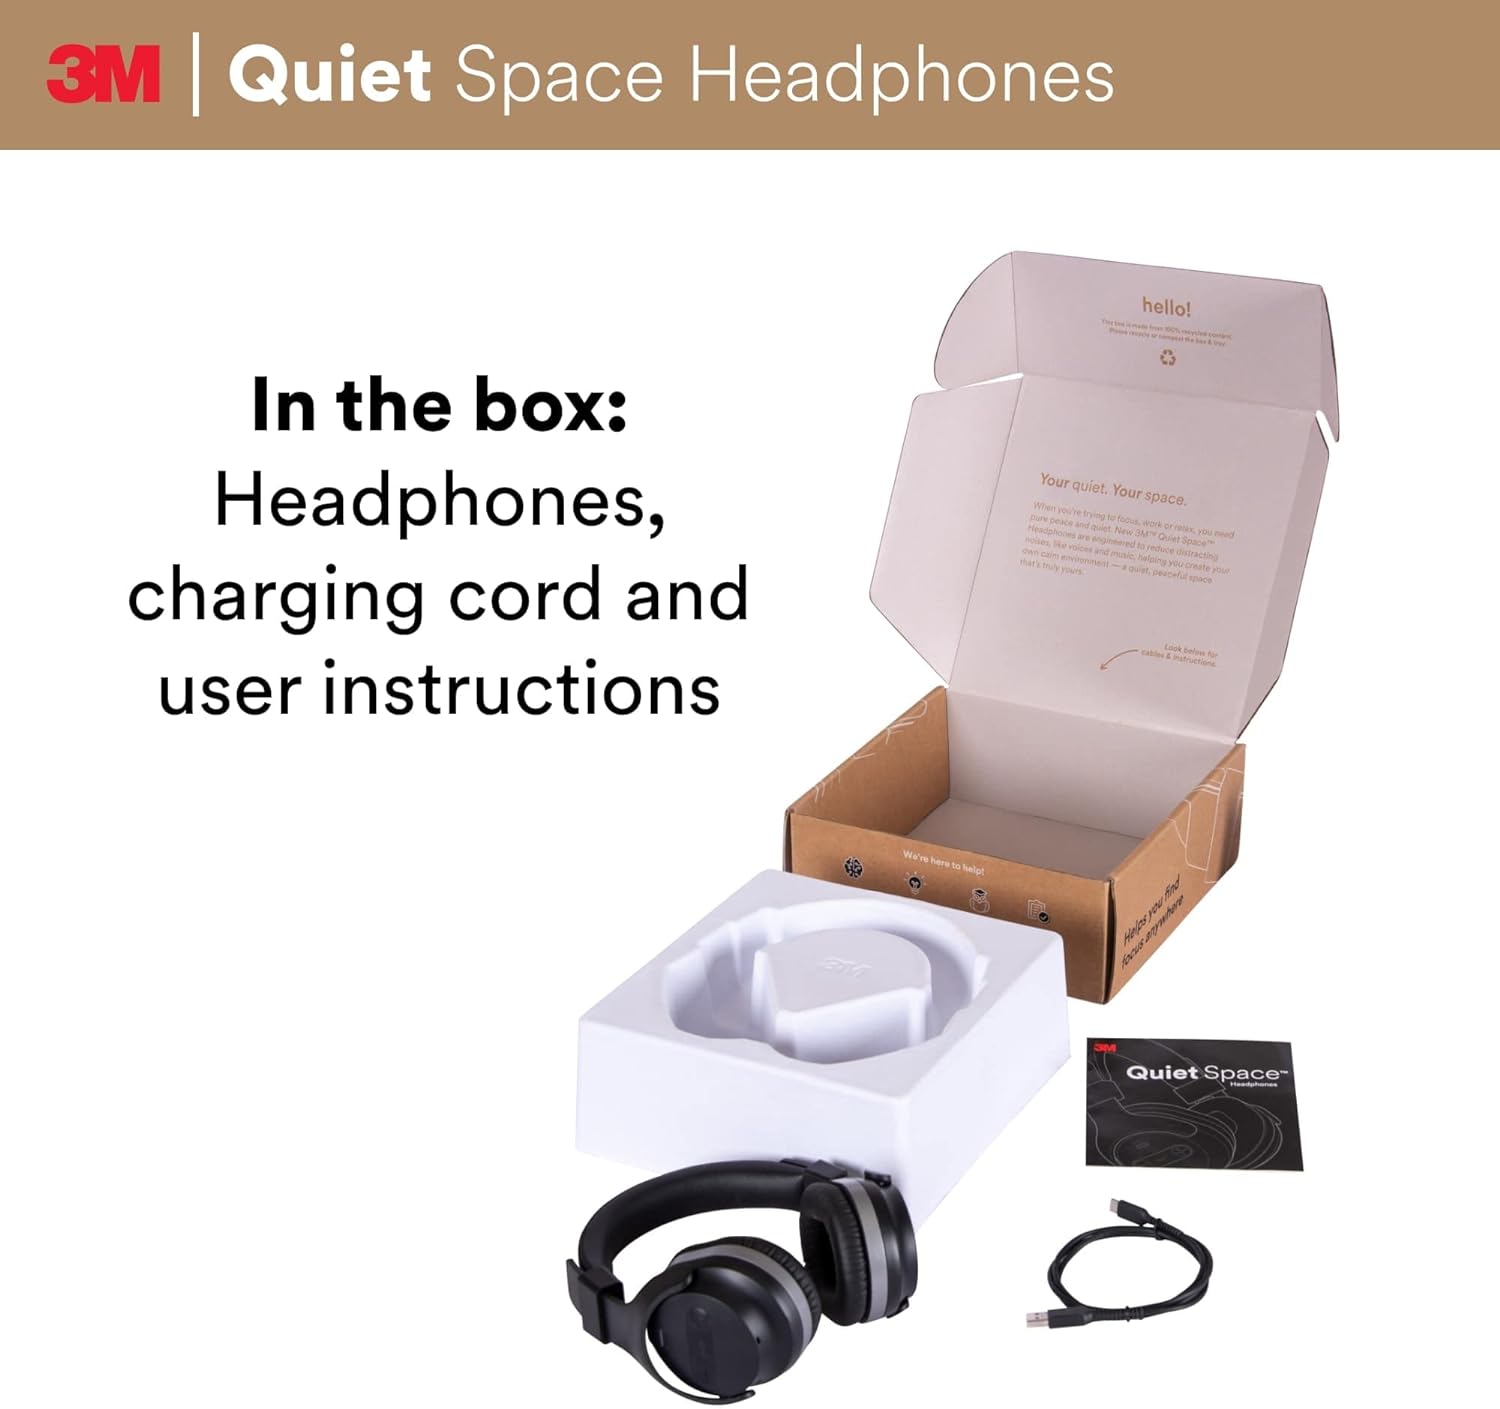 3M Quiet Space Headphones